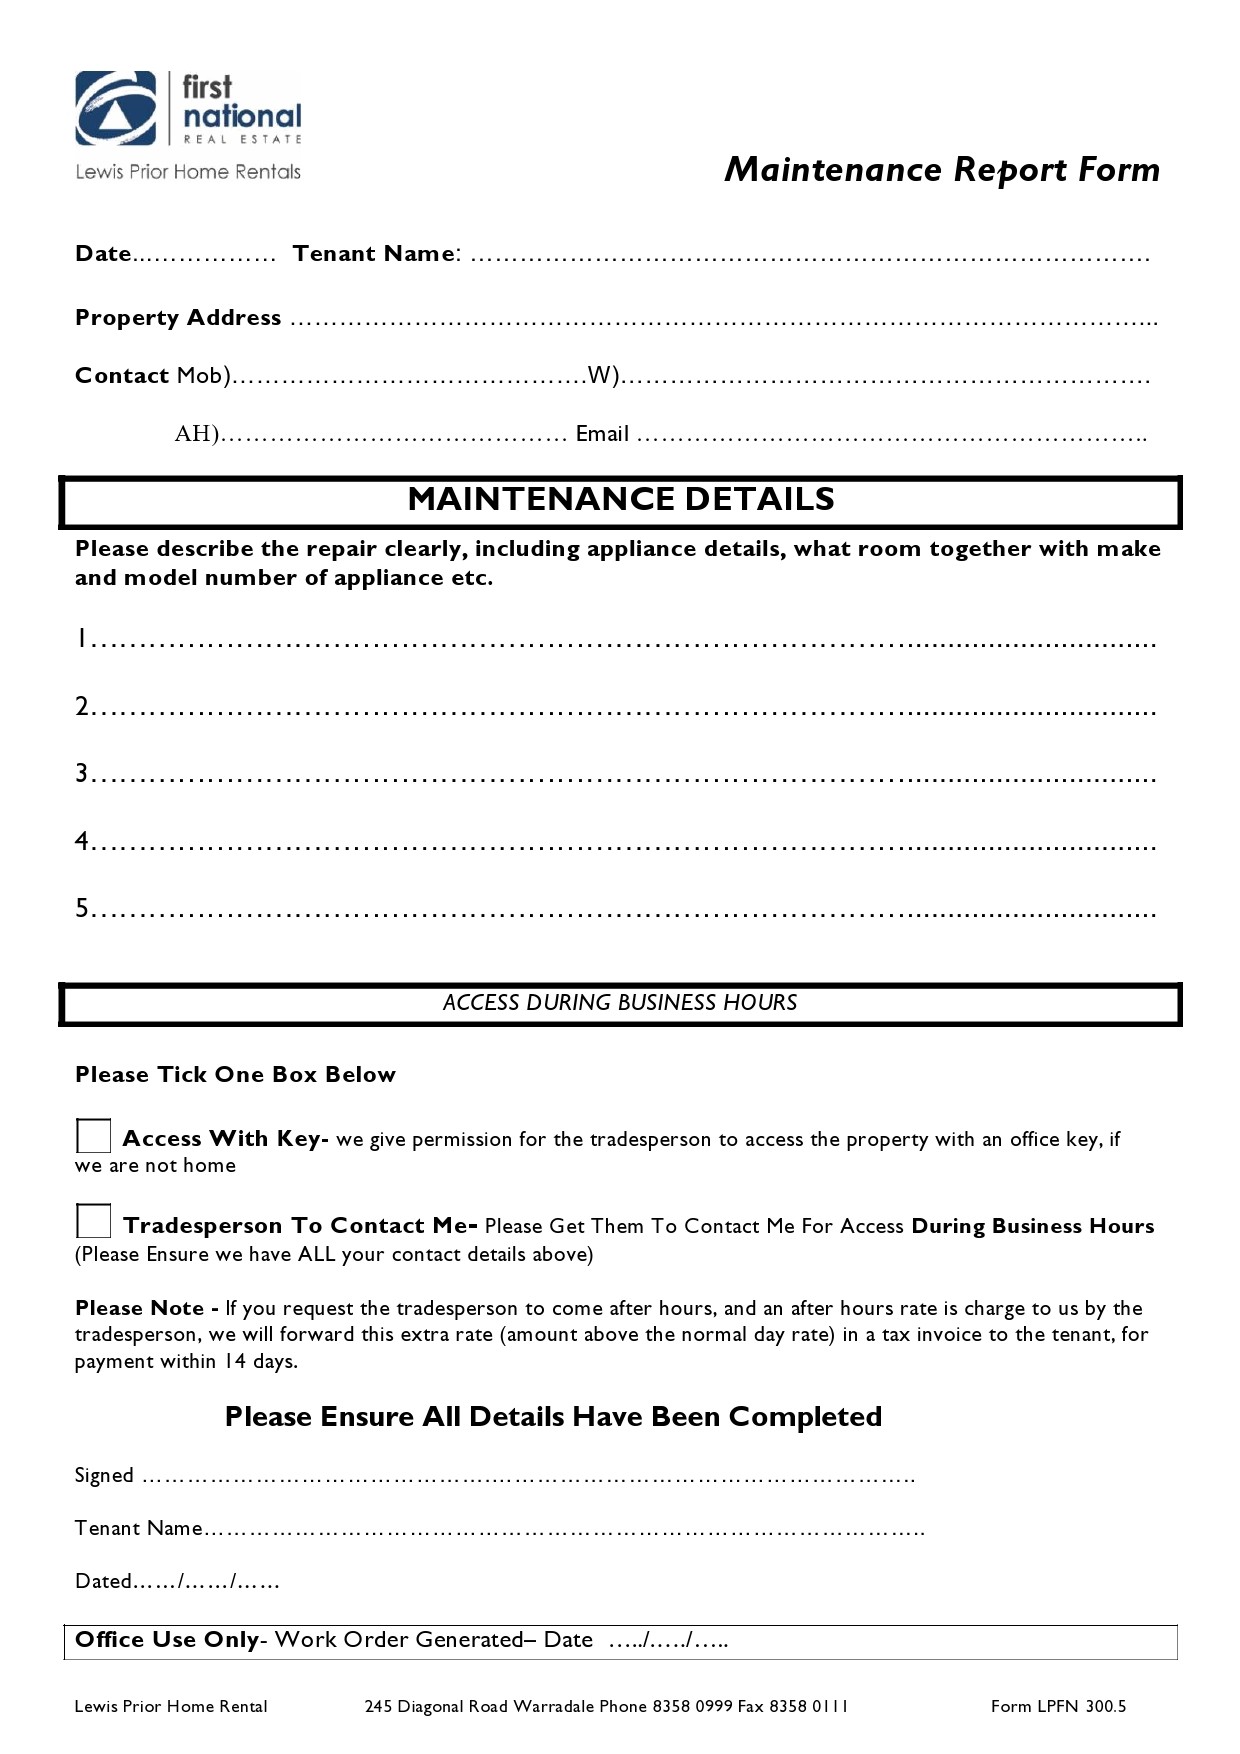 Free maintenance report form 02